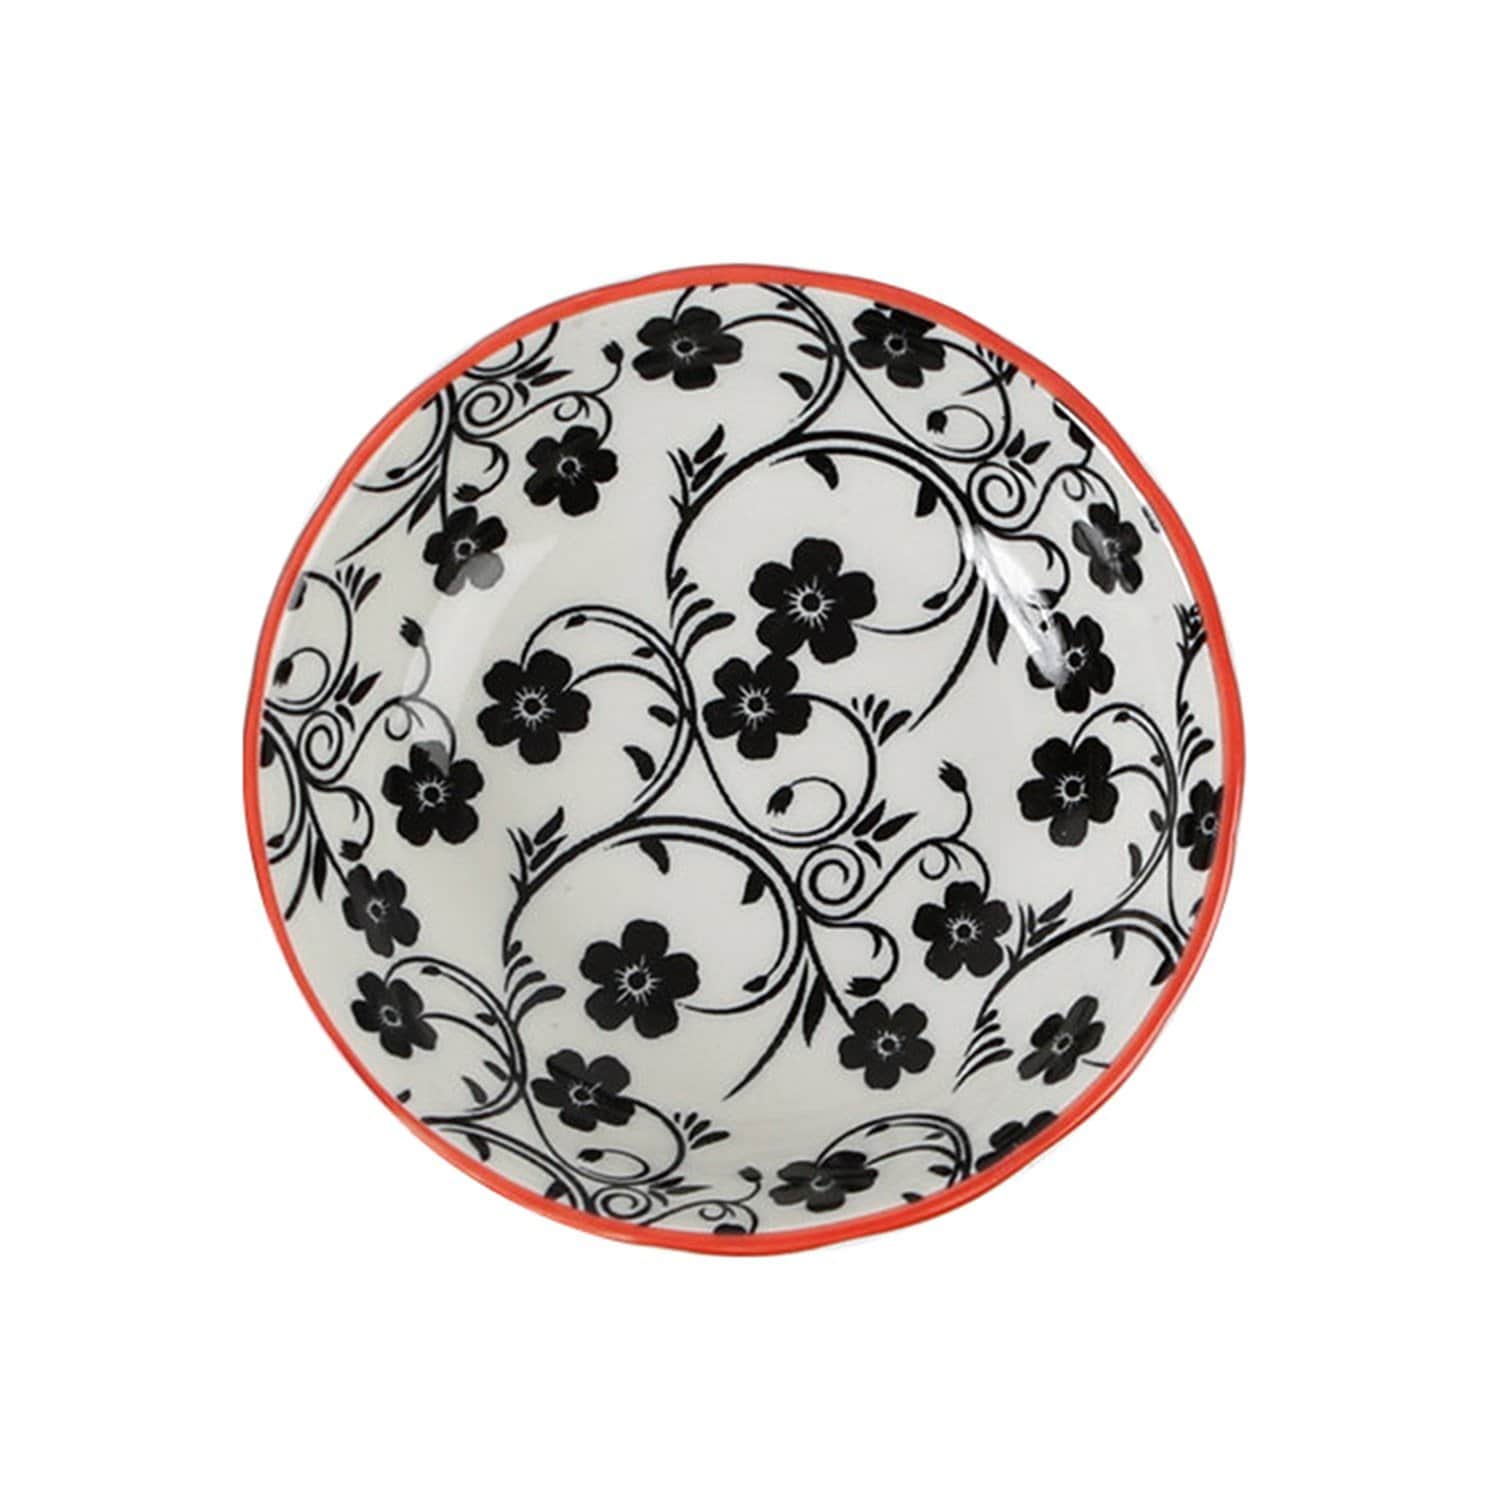 Porland Porselen Mix & Match 9 cm Bowl - Black and White - 04STY003612 - Jashanmal Home